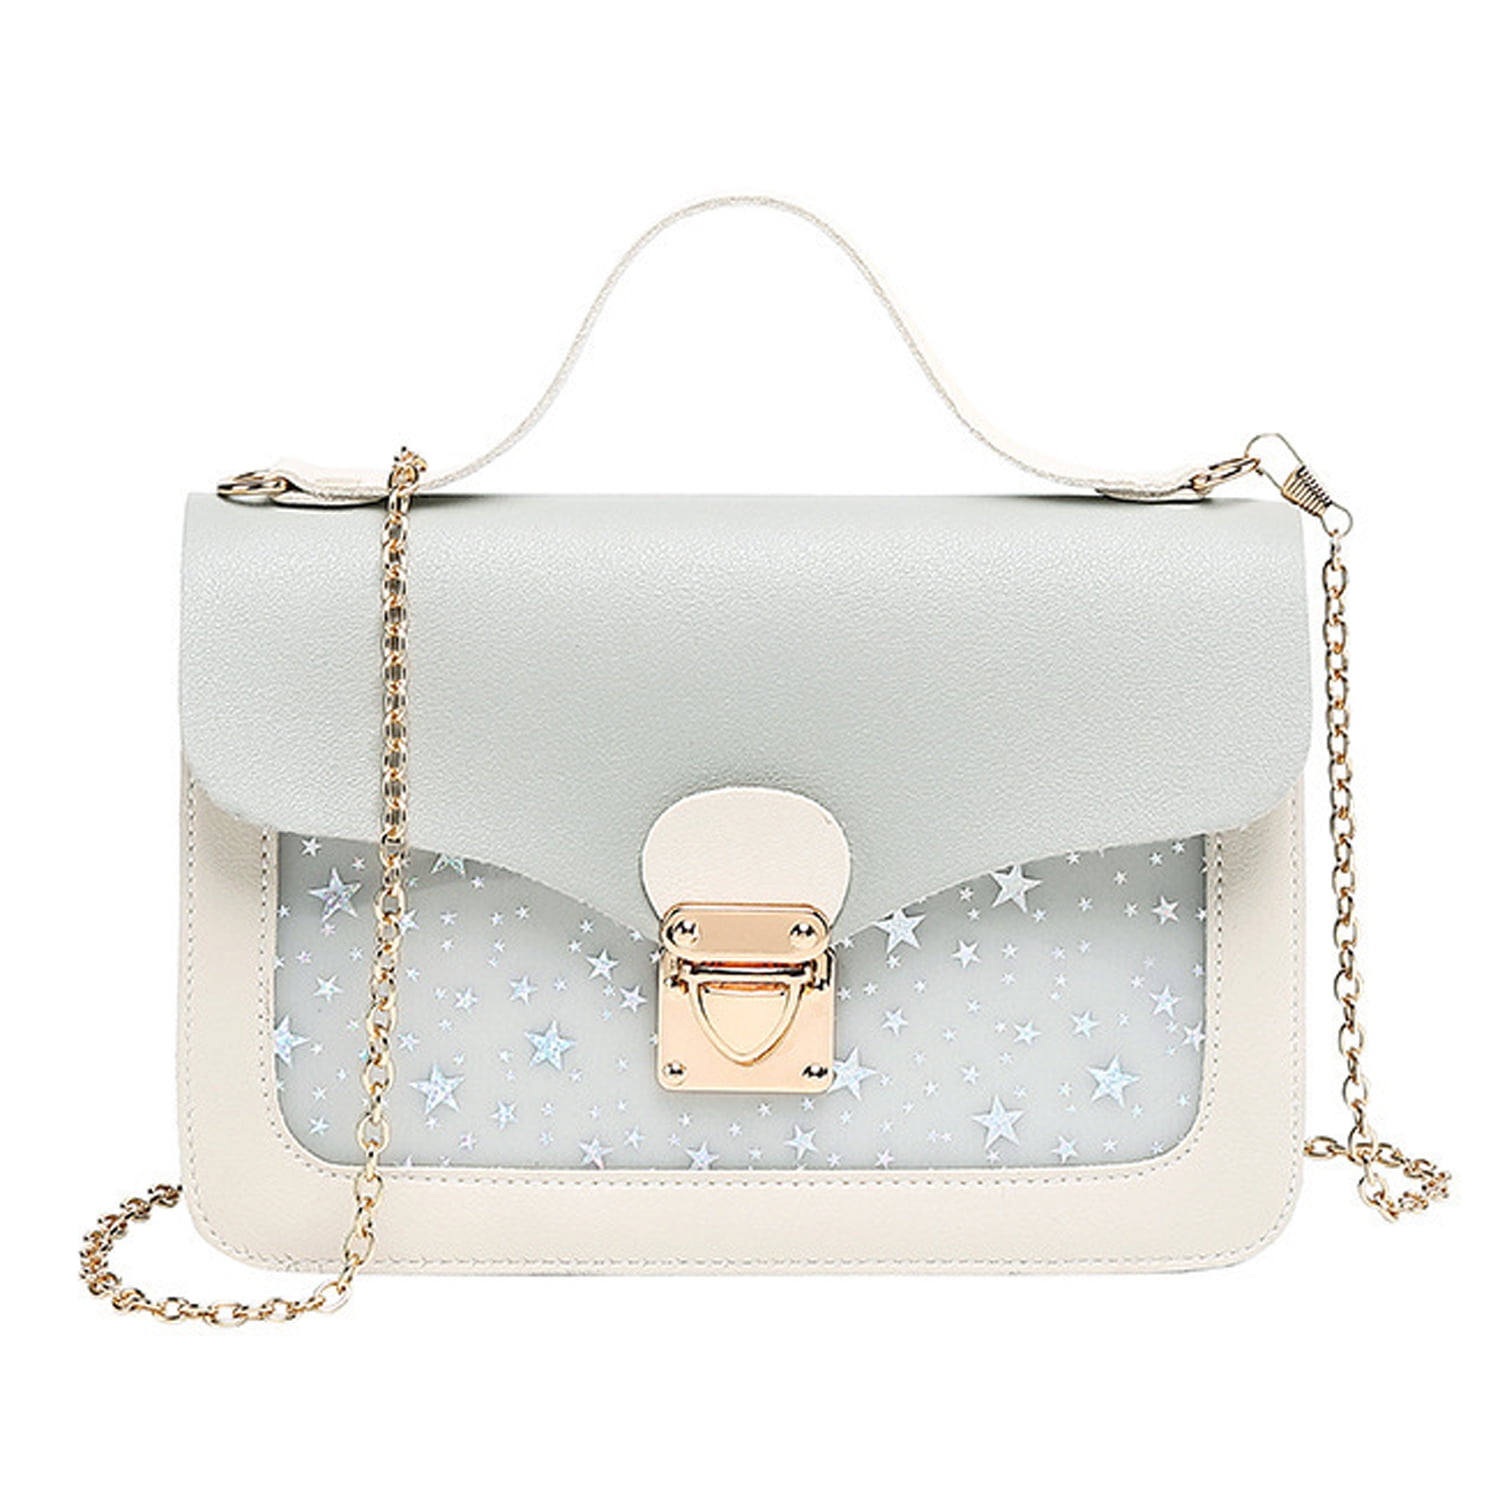 Dooney & Bourke Alto Small Camilla | Trendy purses, Leather handbags, Bags